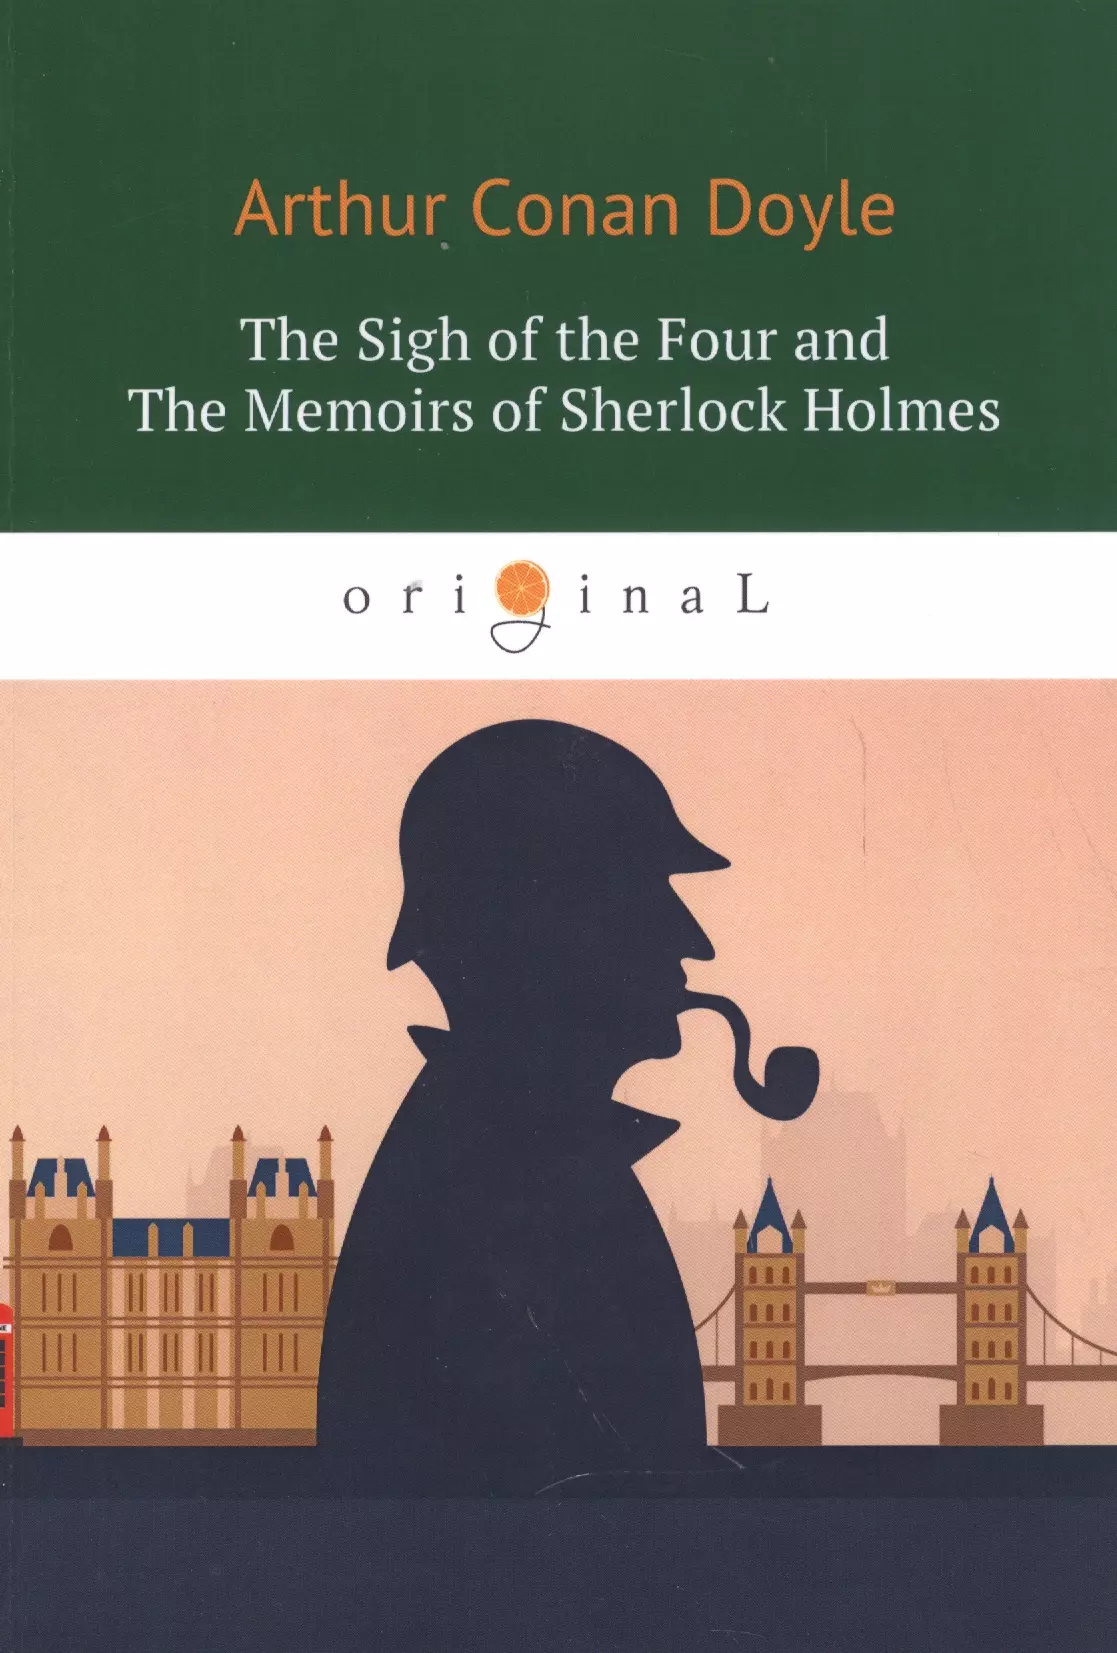 Дойл Артур Конан The Sigh of the Four and The Memoirs of Sherlock Holmes = Знак Четырех и Воспоминания Шерлока Холмса